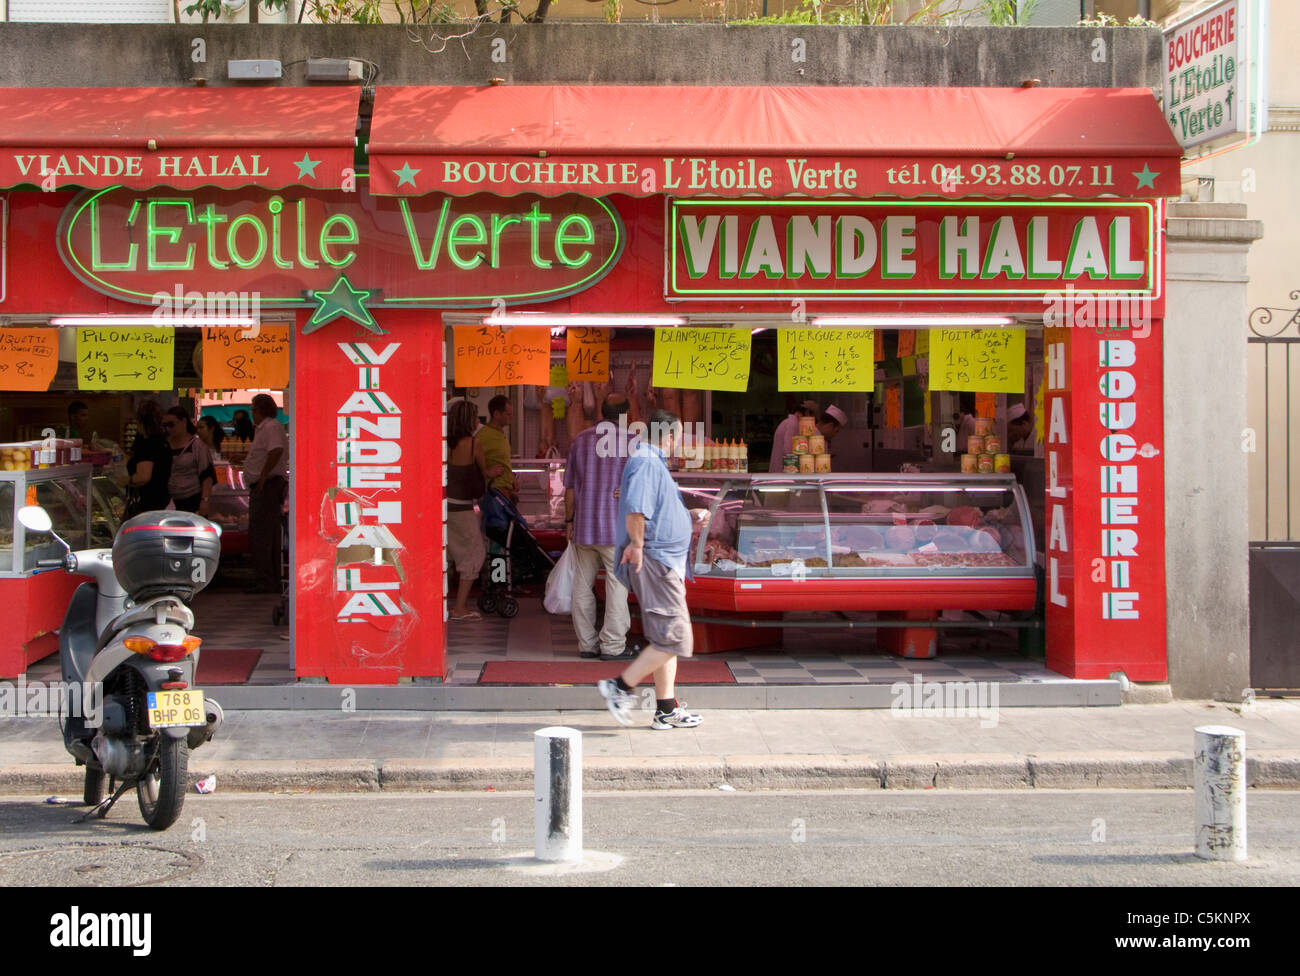 Halal-Fleischerei namens Green Star, Nizza, Frankreich Stockfoto